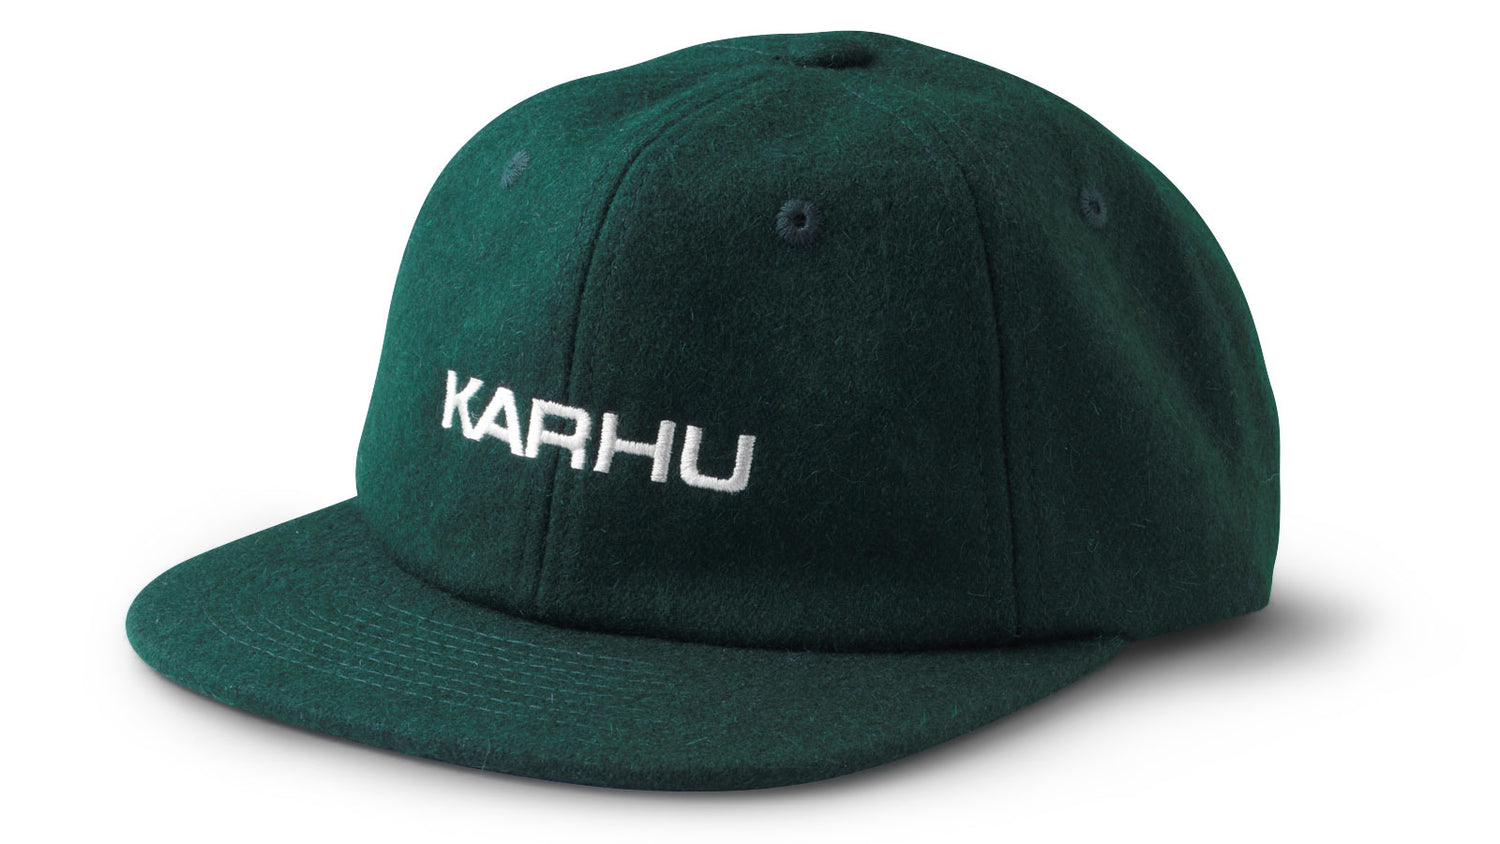 Cap - karhu logo KA00149-71LW front